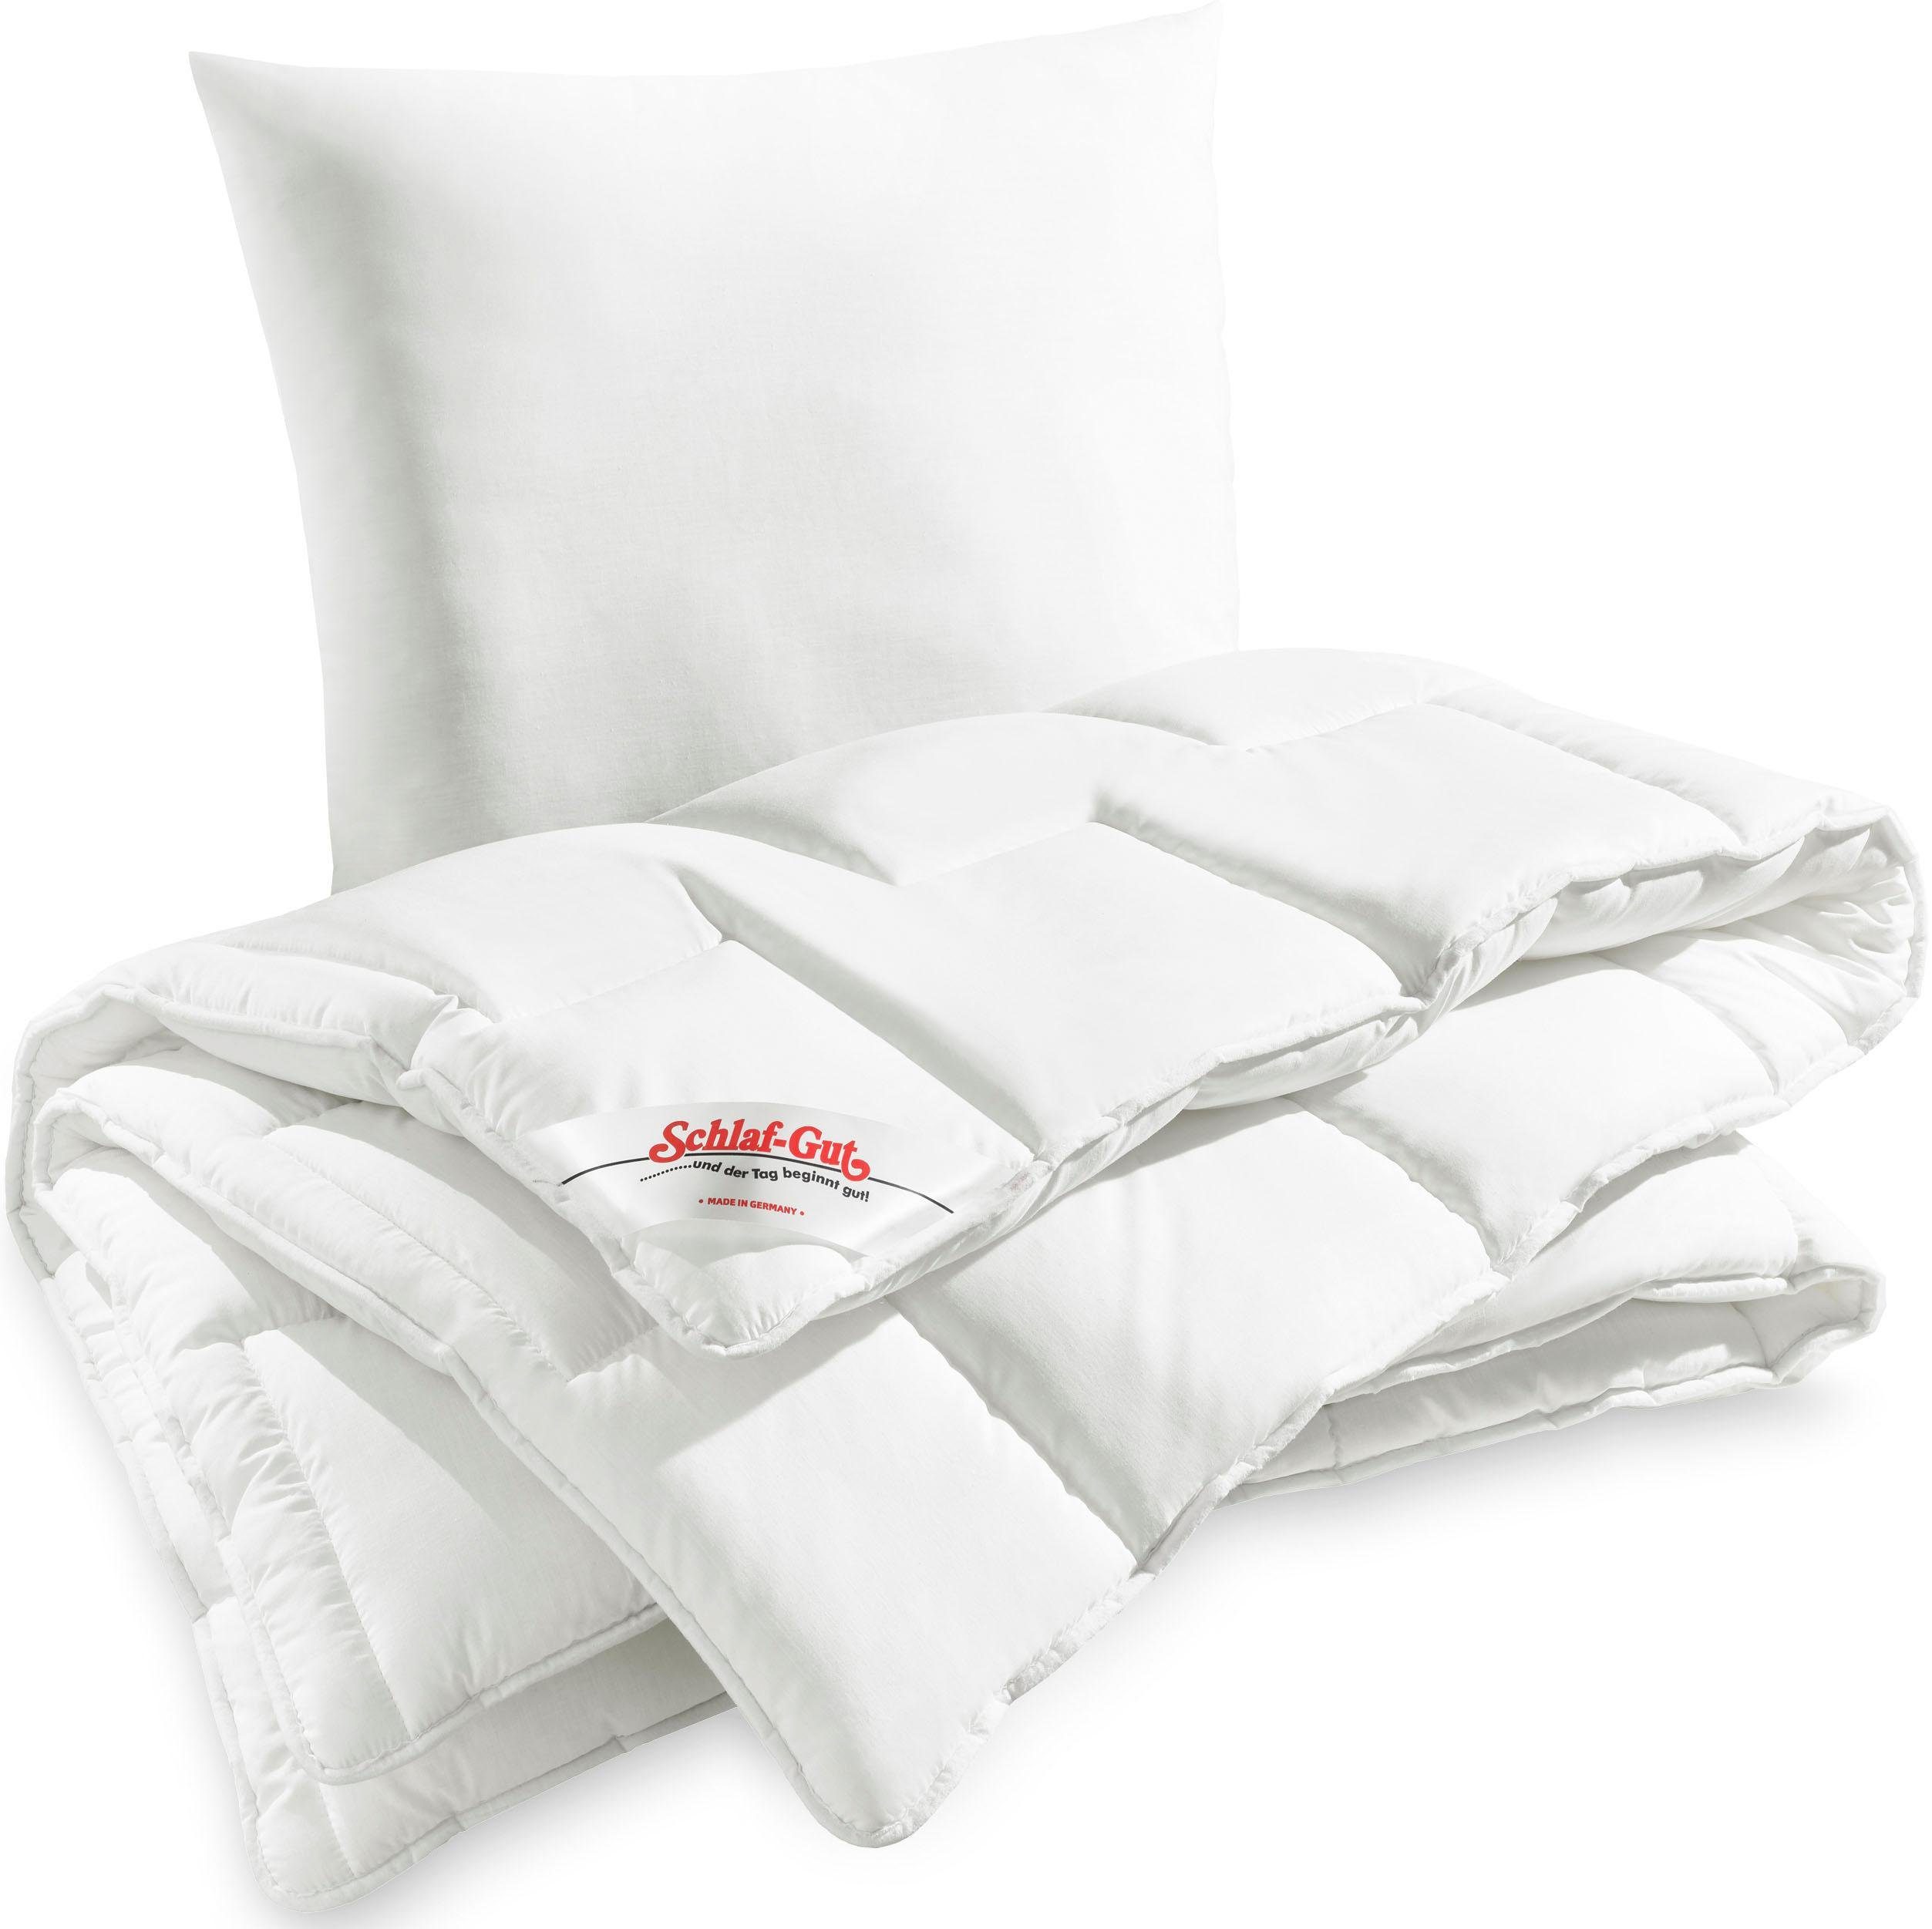 Polyester Bettdecke Füllung: Polytherm®, 50% + Schlaf-Gut Baumwolle, Utah, 50% Kopfkissen, Bezug: Schlaf-Gut,